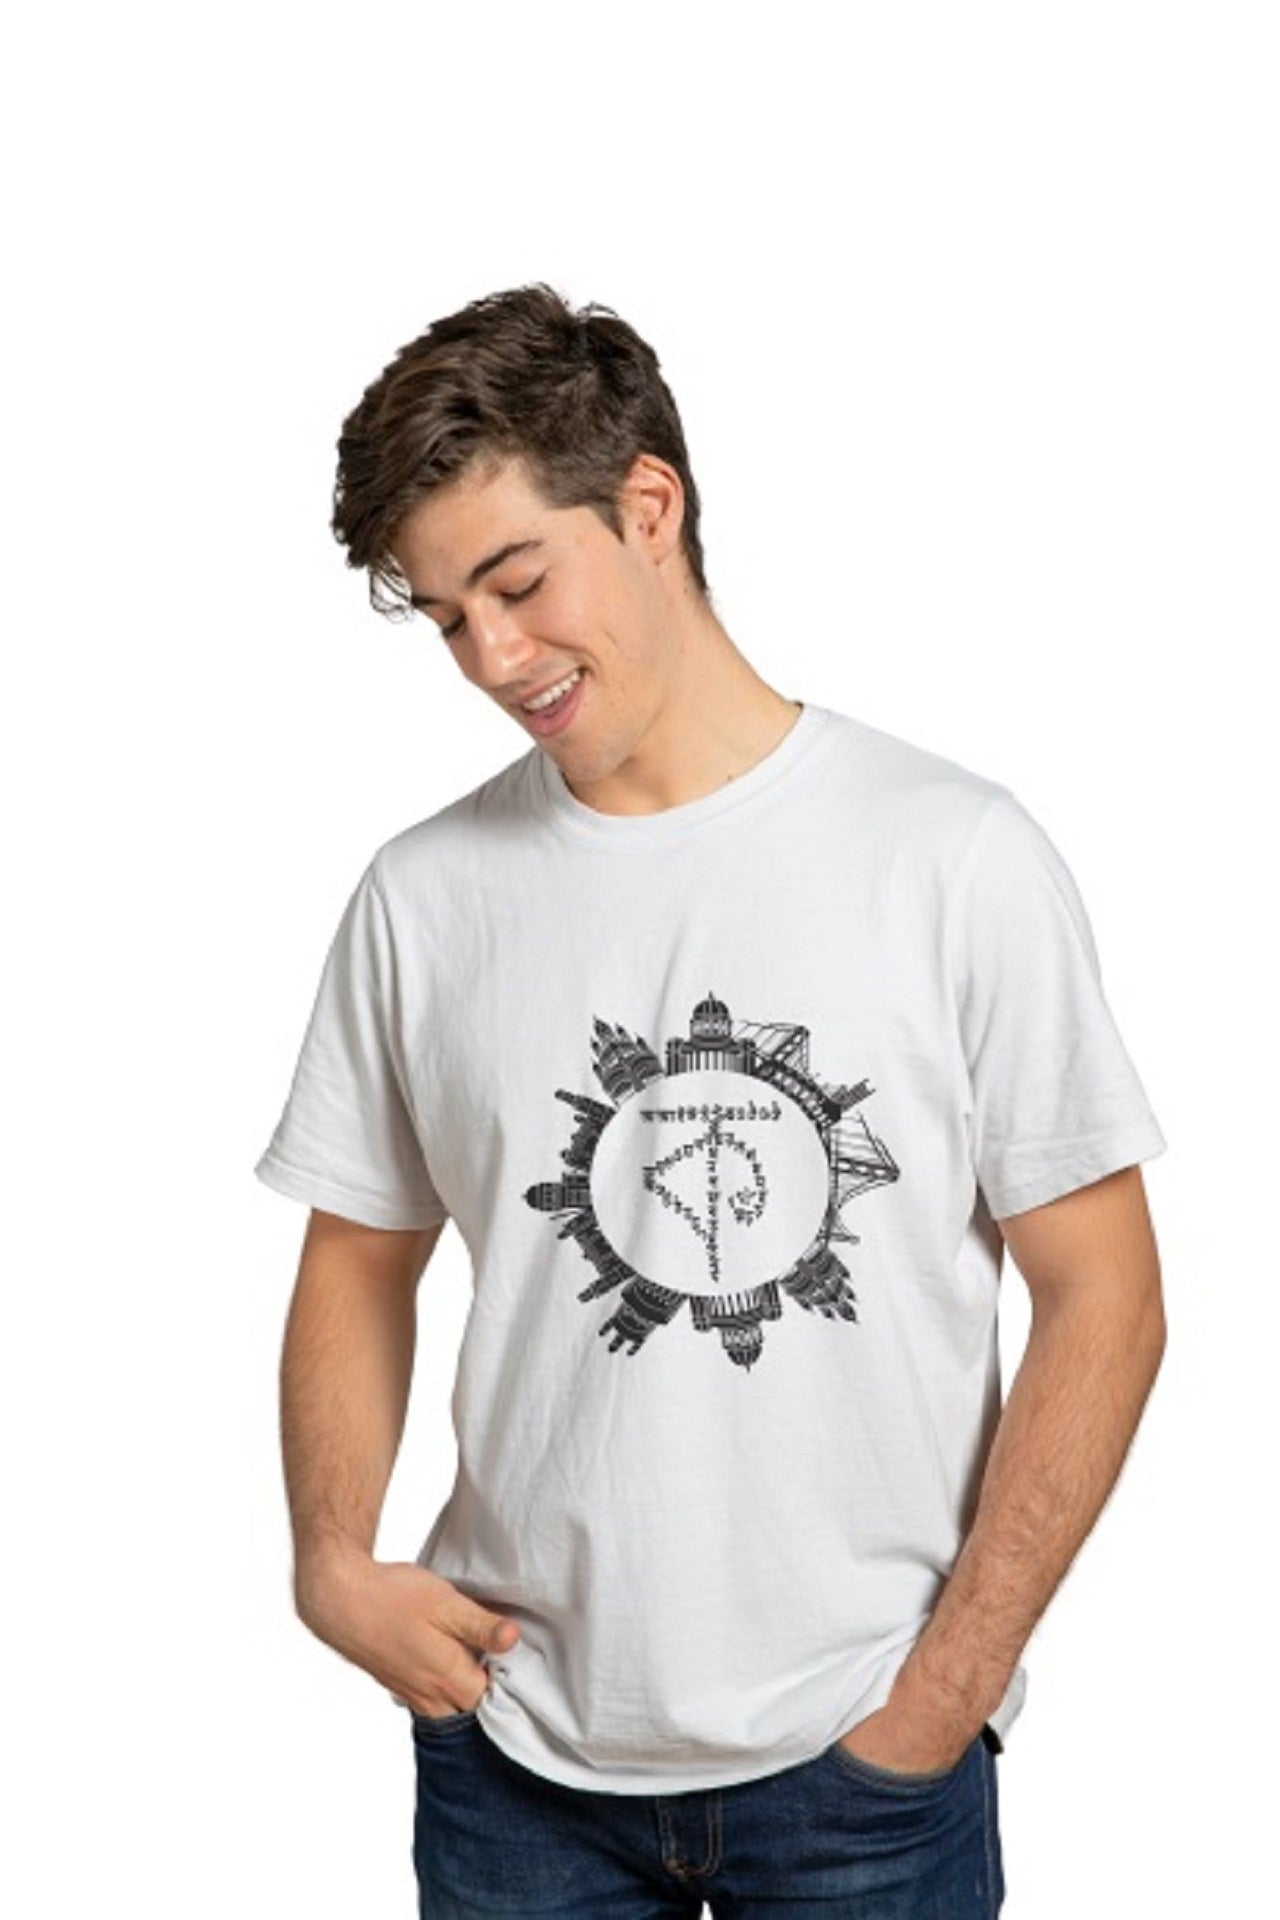  Printed T Shirt Online